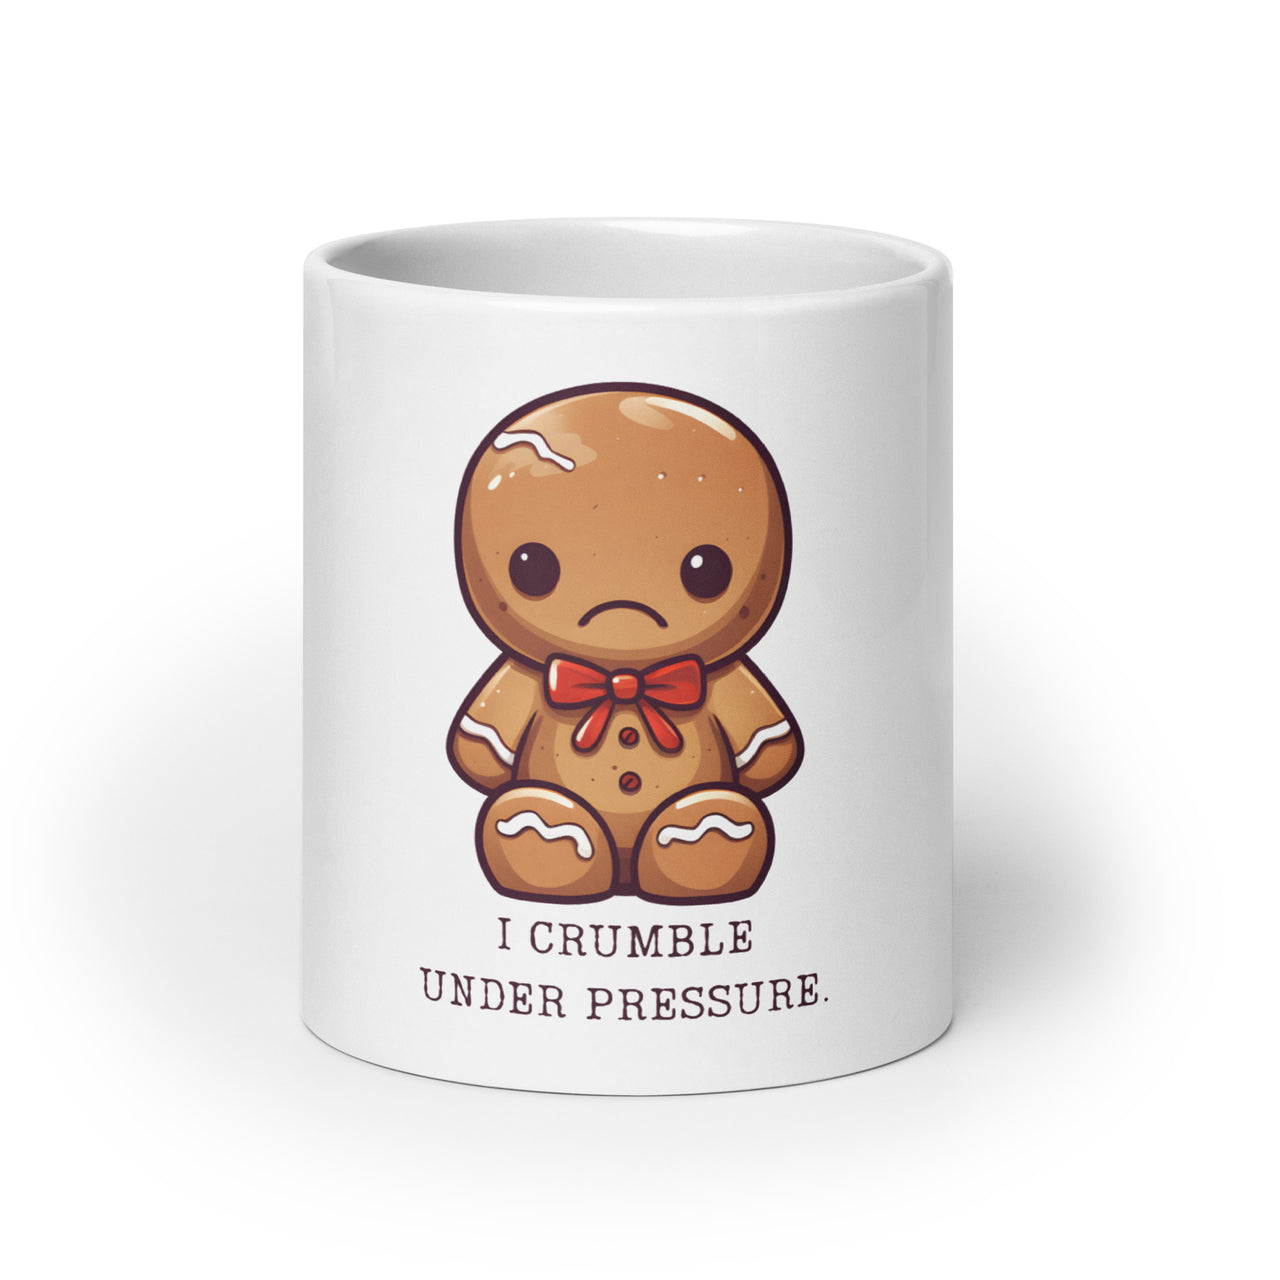 Crumble with Pressure: Sad Gingerbread White Mug